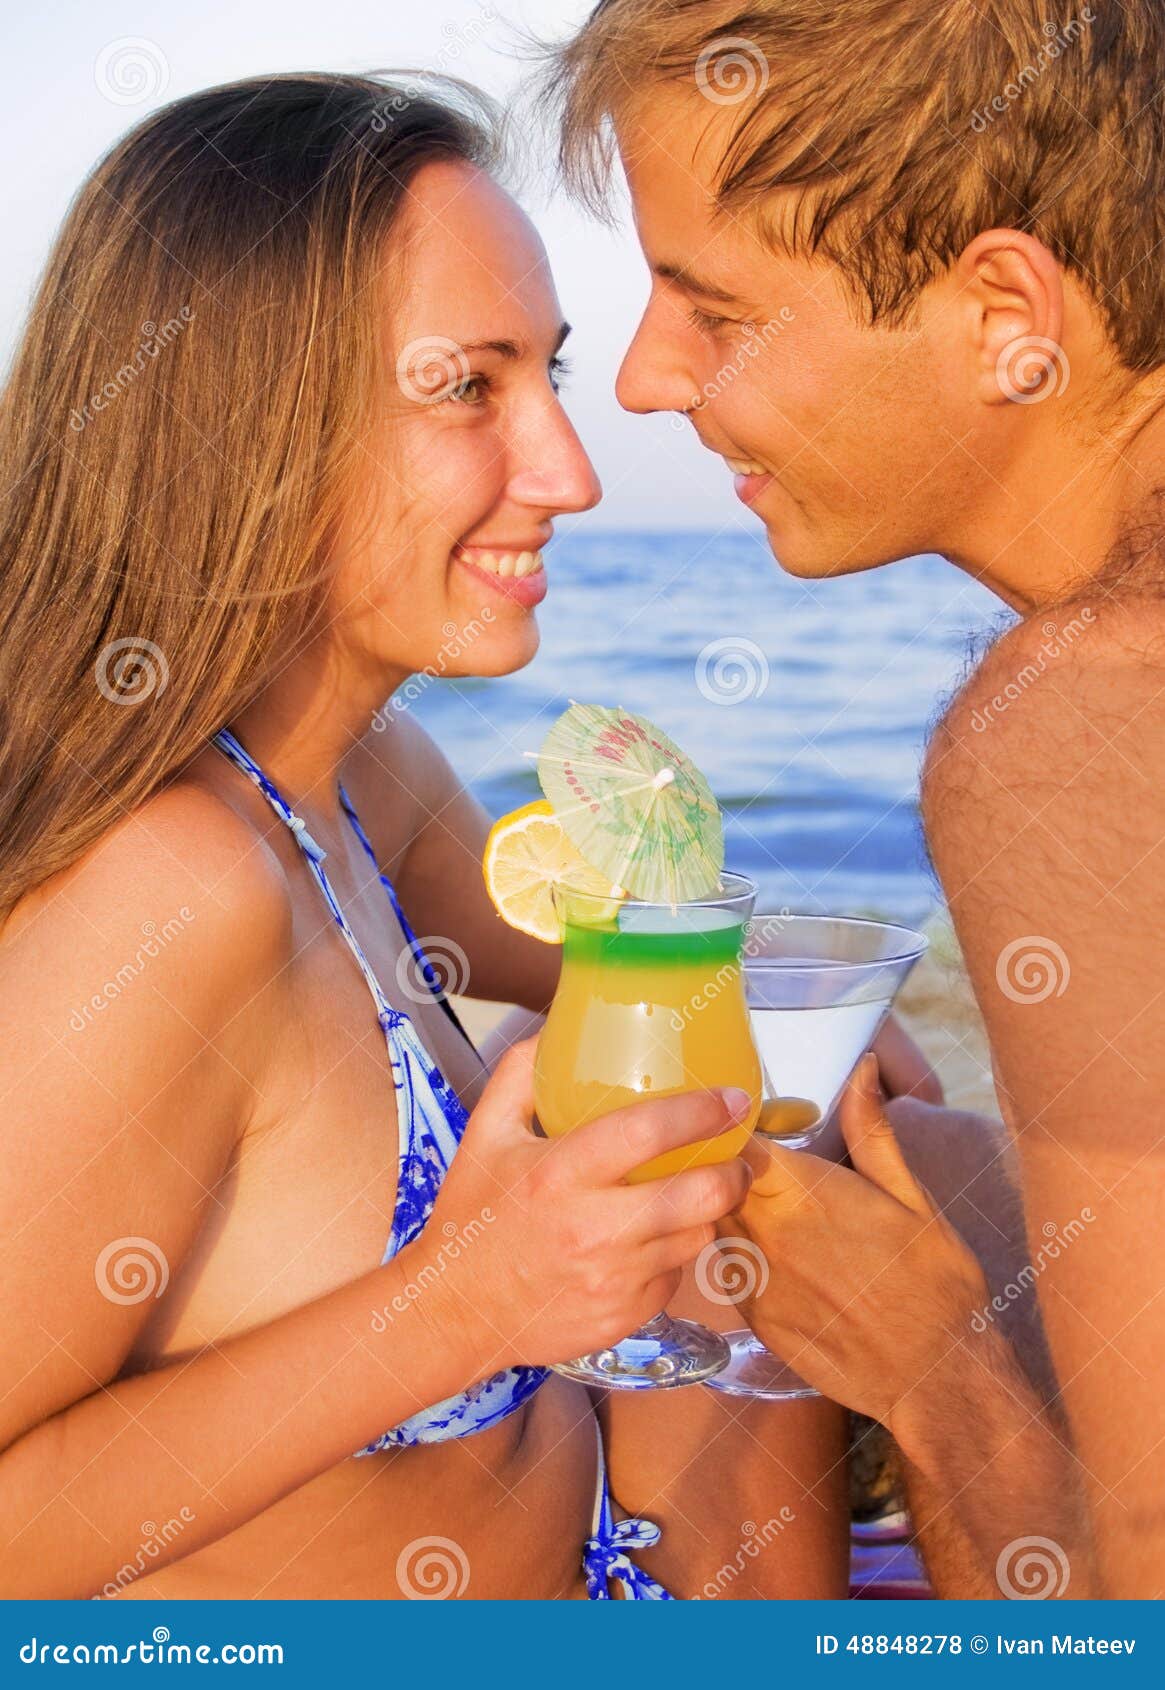 sunset martini dating